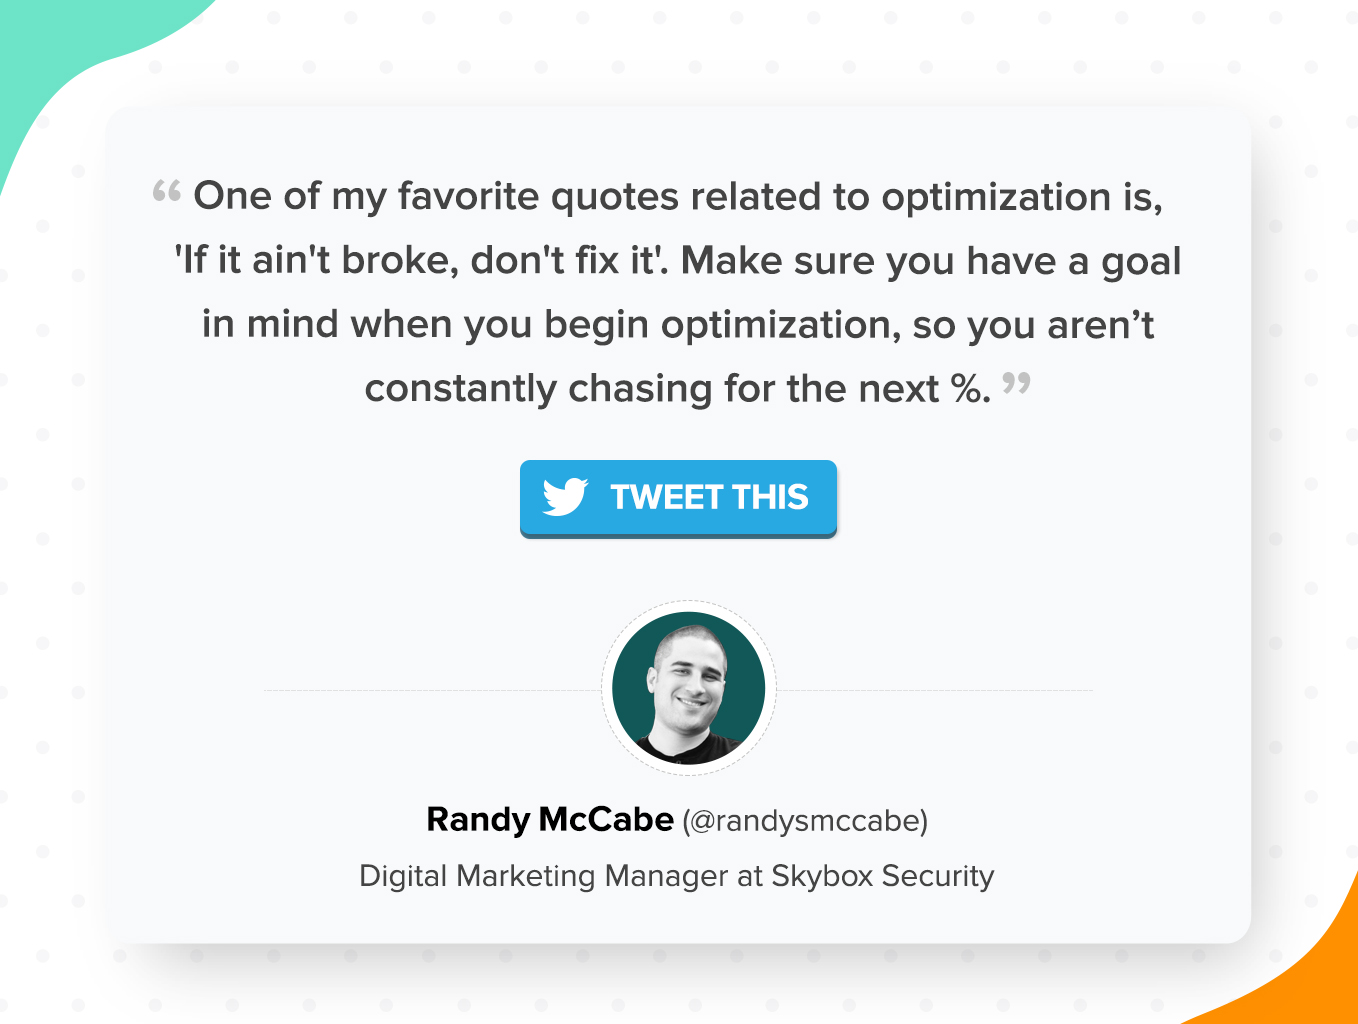 Randy McCabe PageSense Chat Tweet